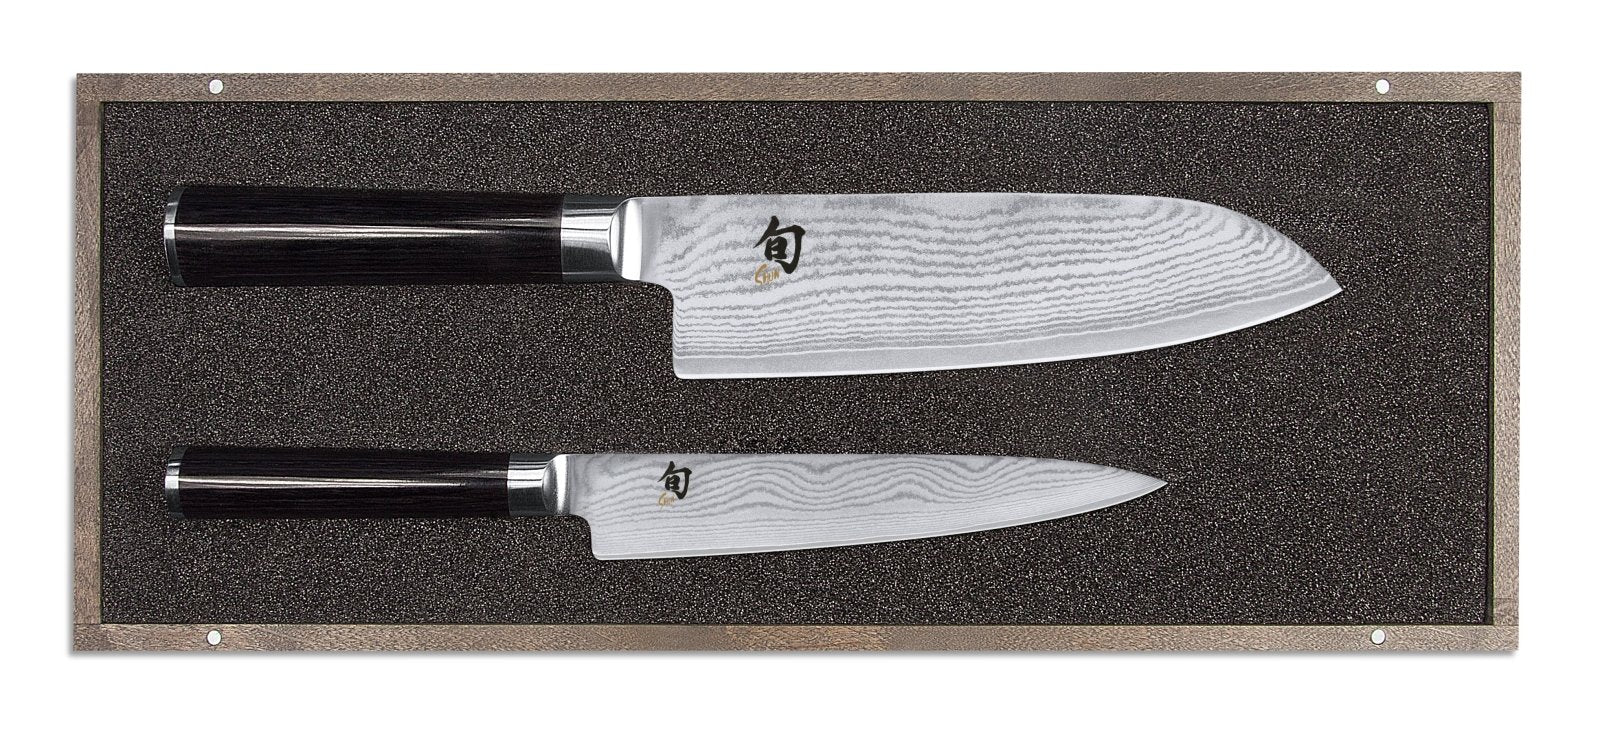 KAI Shun 2 Piece Knife Set - Santoku Knife & Utility Knife - KAI-DMS-230 - The Cotswold Knife Company